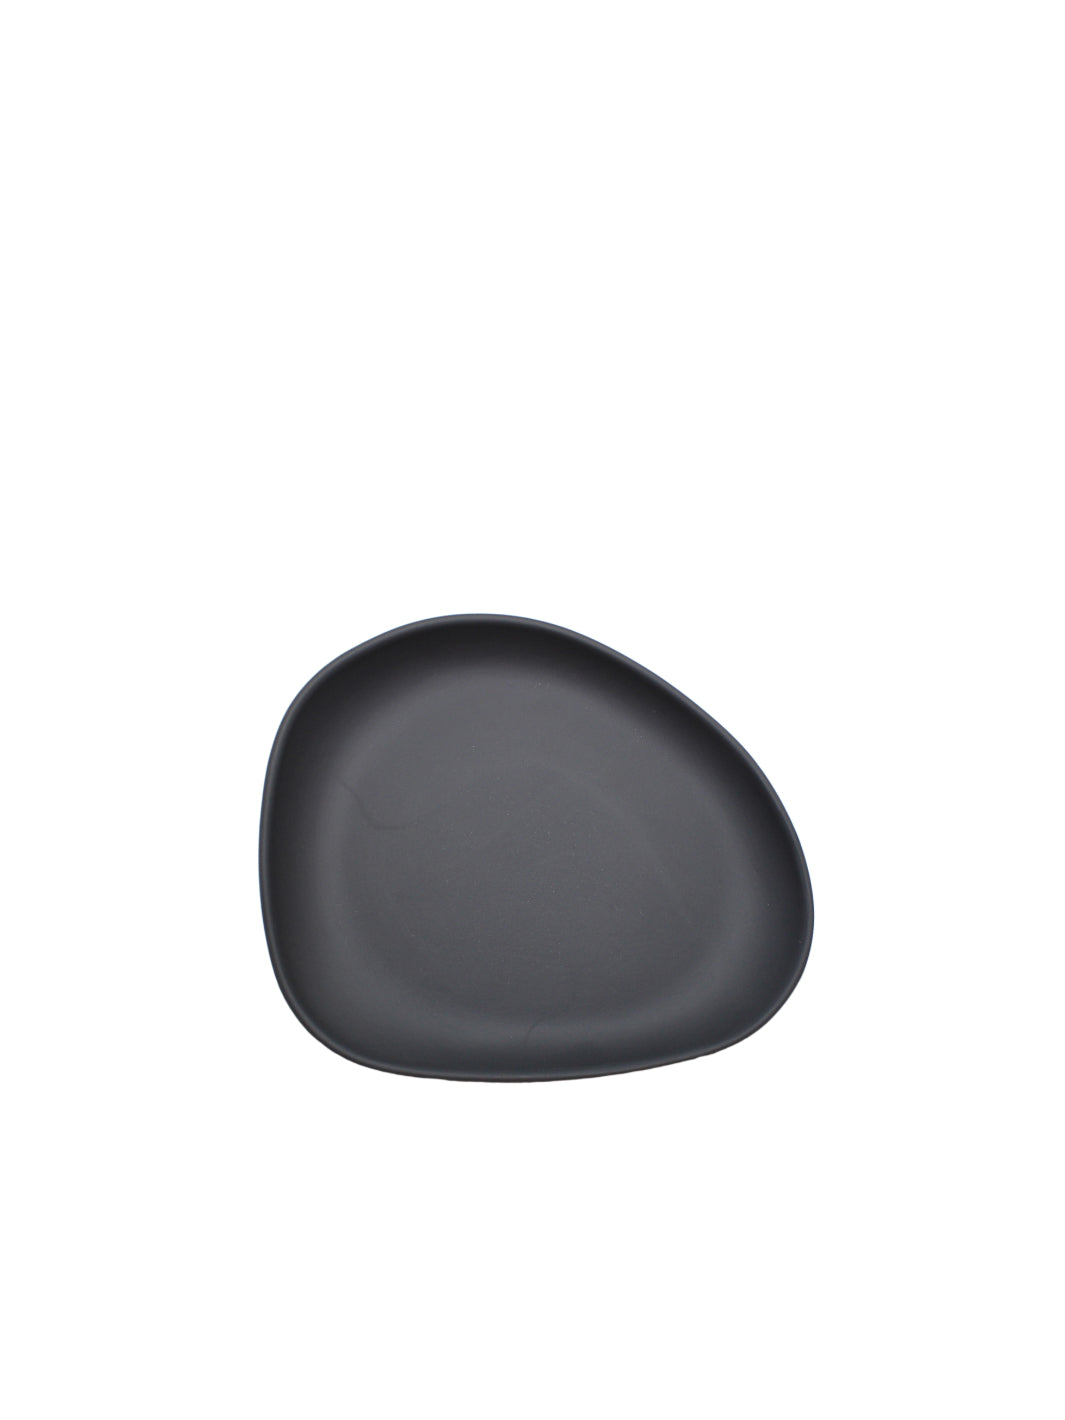 COOKPLAY Yayoi Deep Plate (Matte Black) (19x16cm/7.5x6.3in)